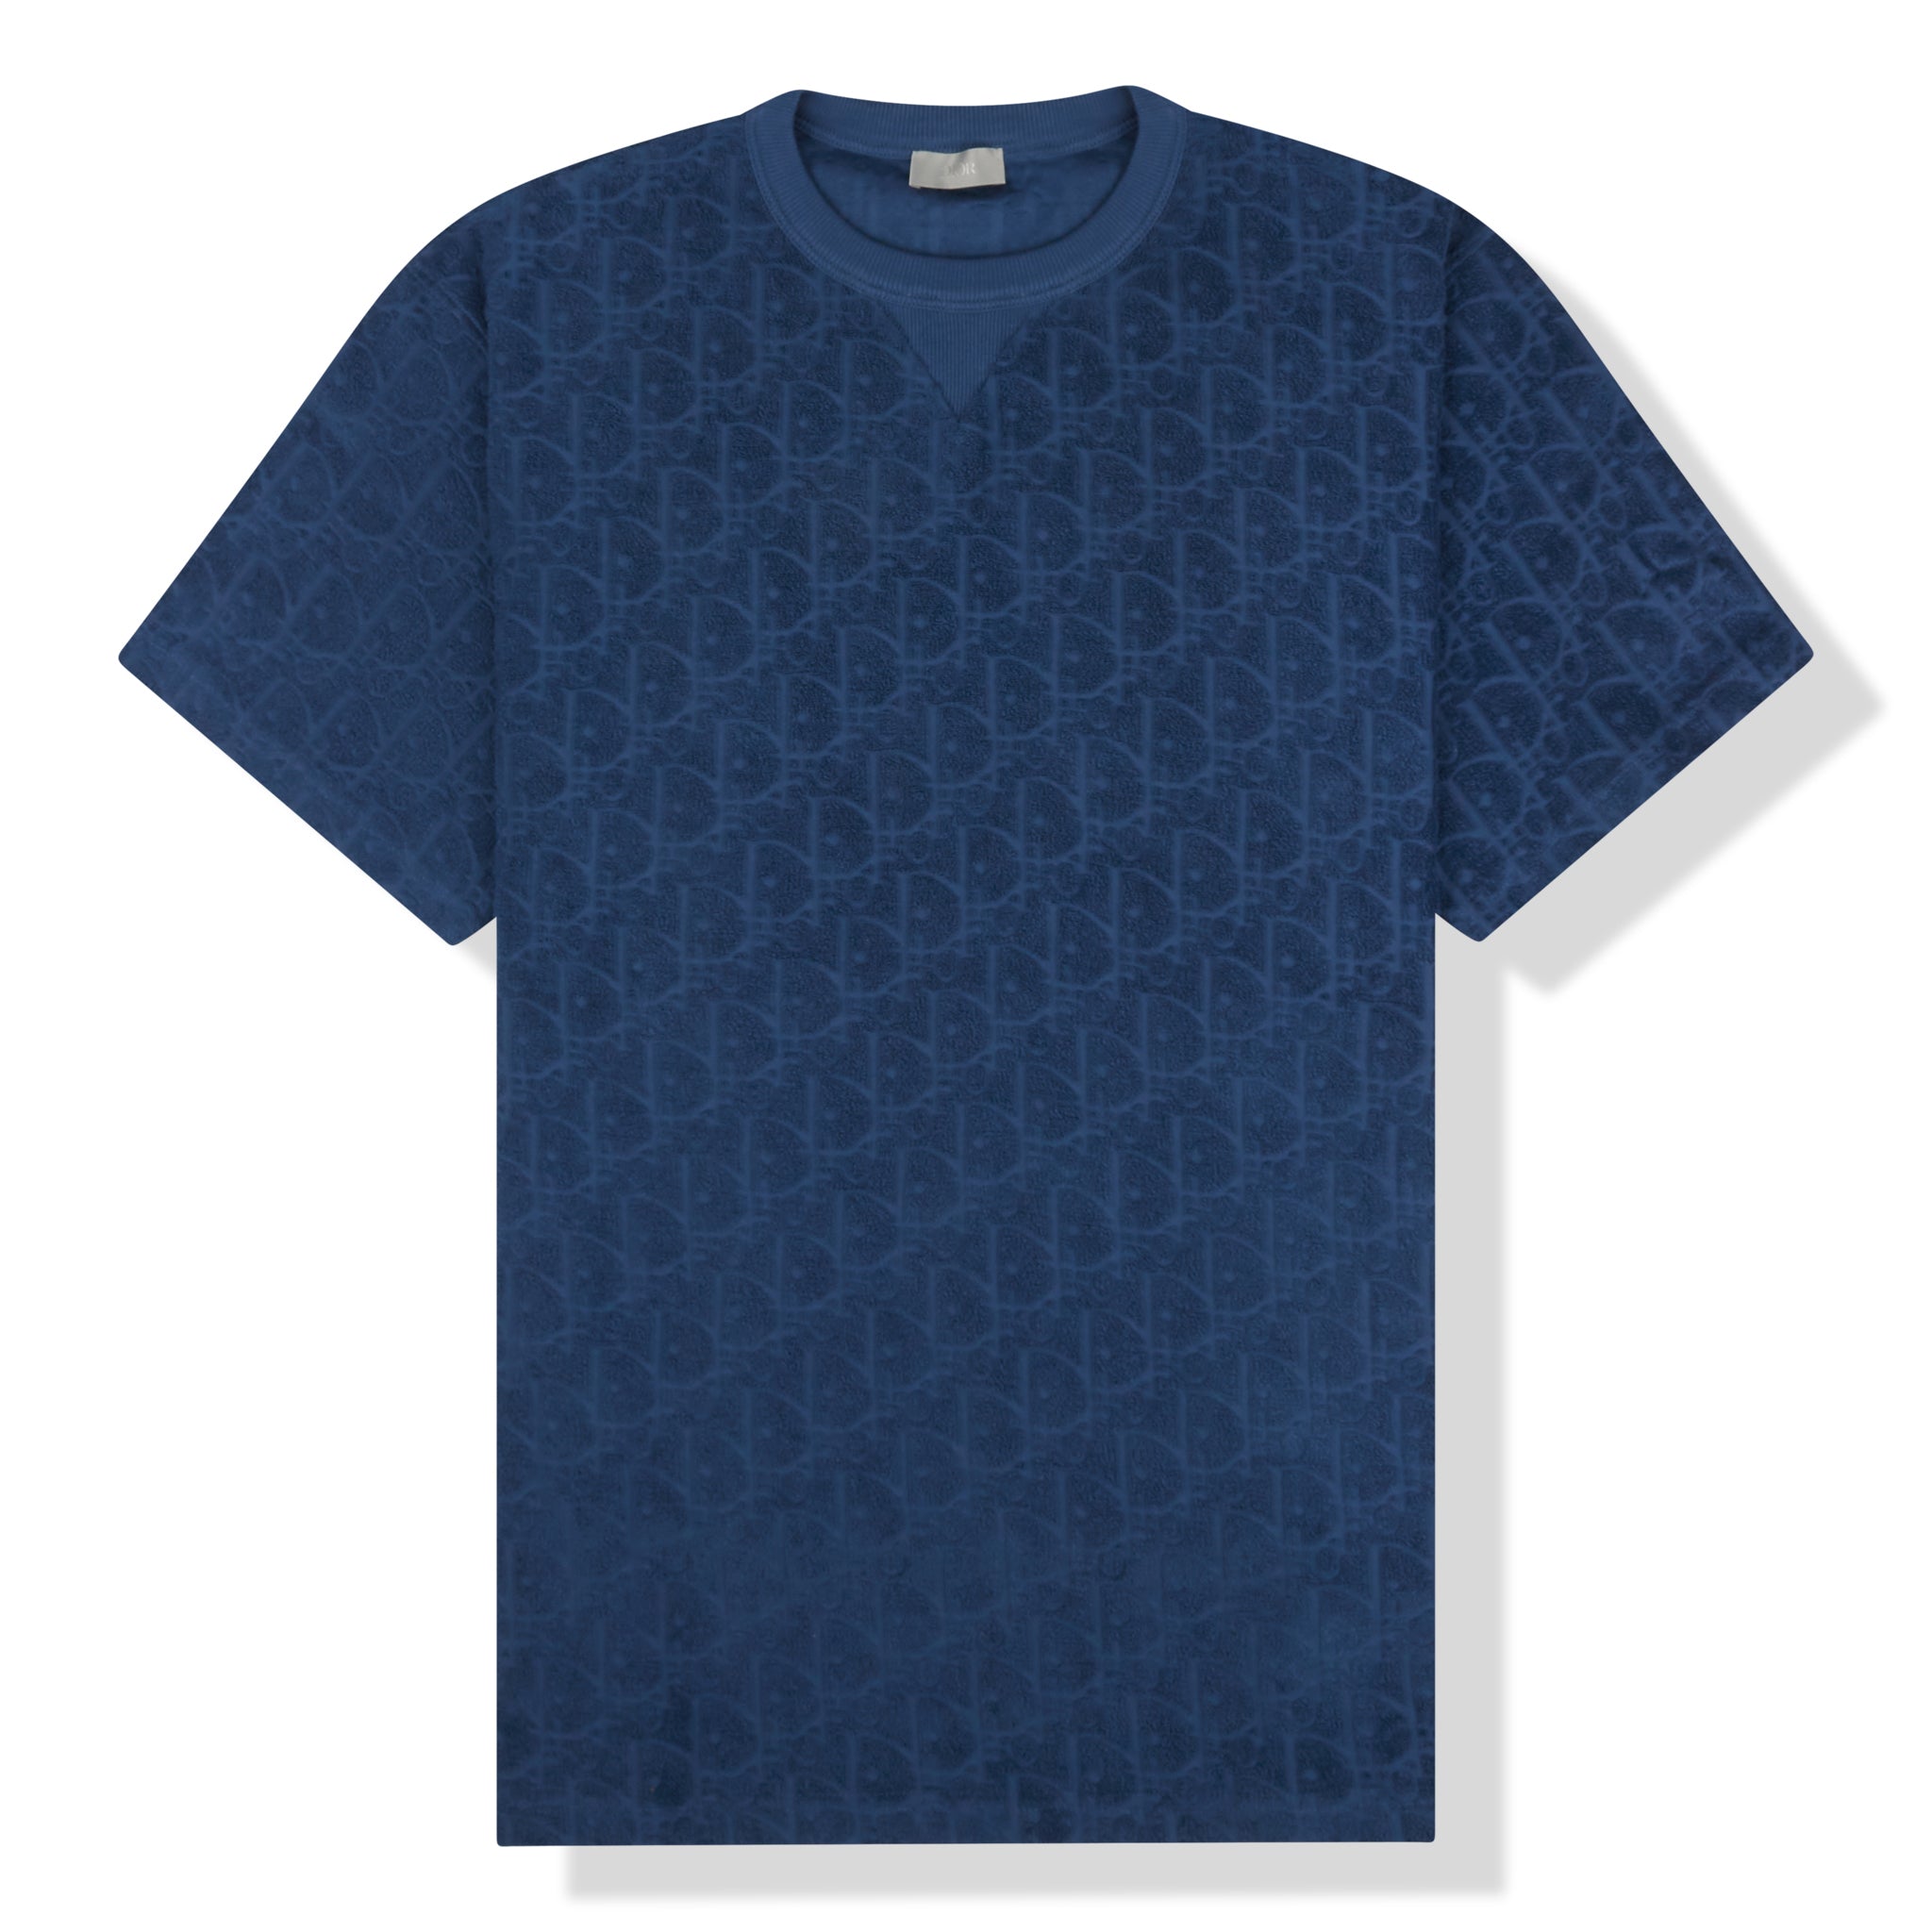 Louis Vuitton - Authenticated Shirt - Cotton Blue Striped for Men, Very Good Condition